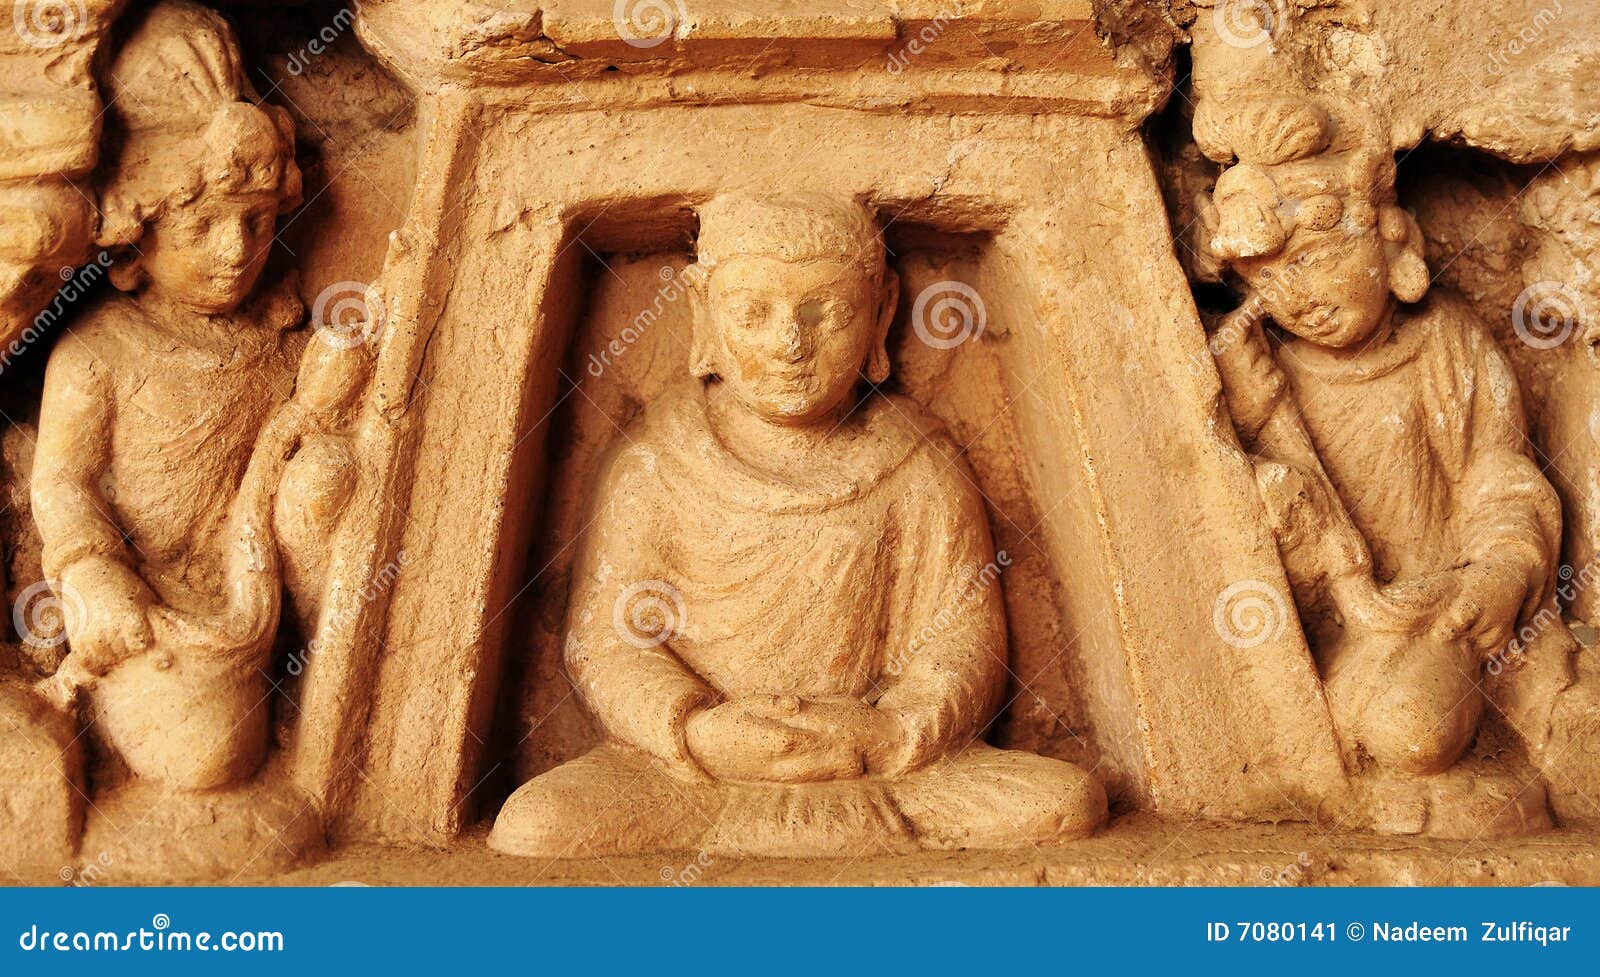 ancient buddhist sculptures